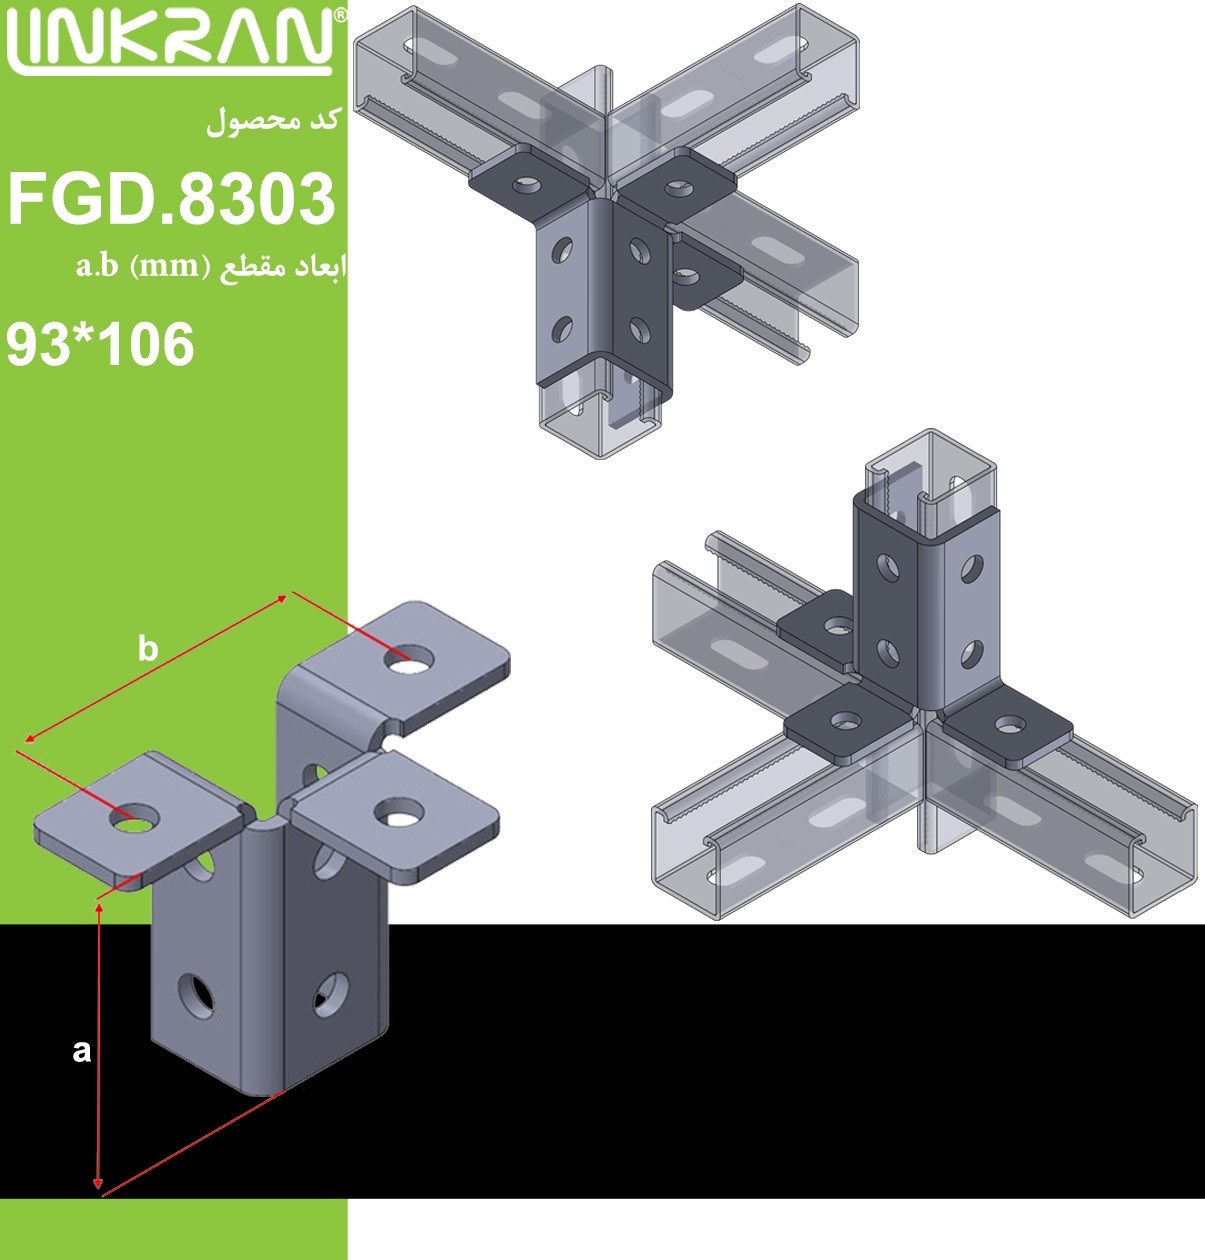 اتصال سه لبه 9 سوراخ پروفيل FGD.8303 – G گروه صنعتی لینکران